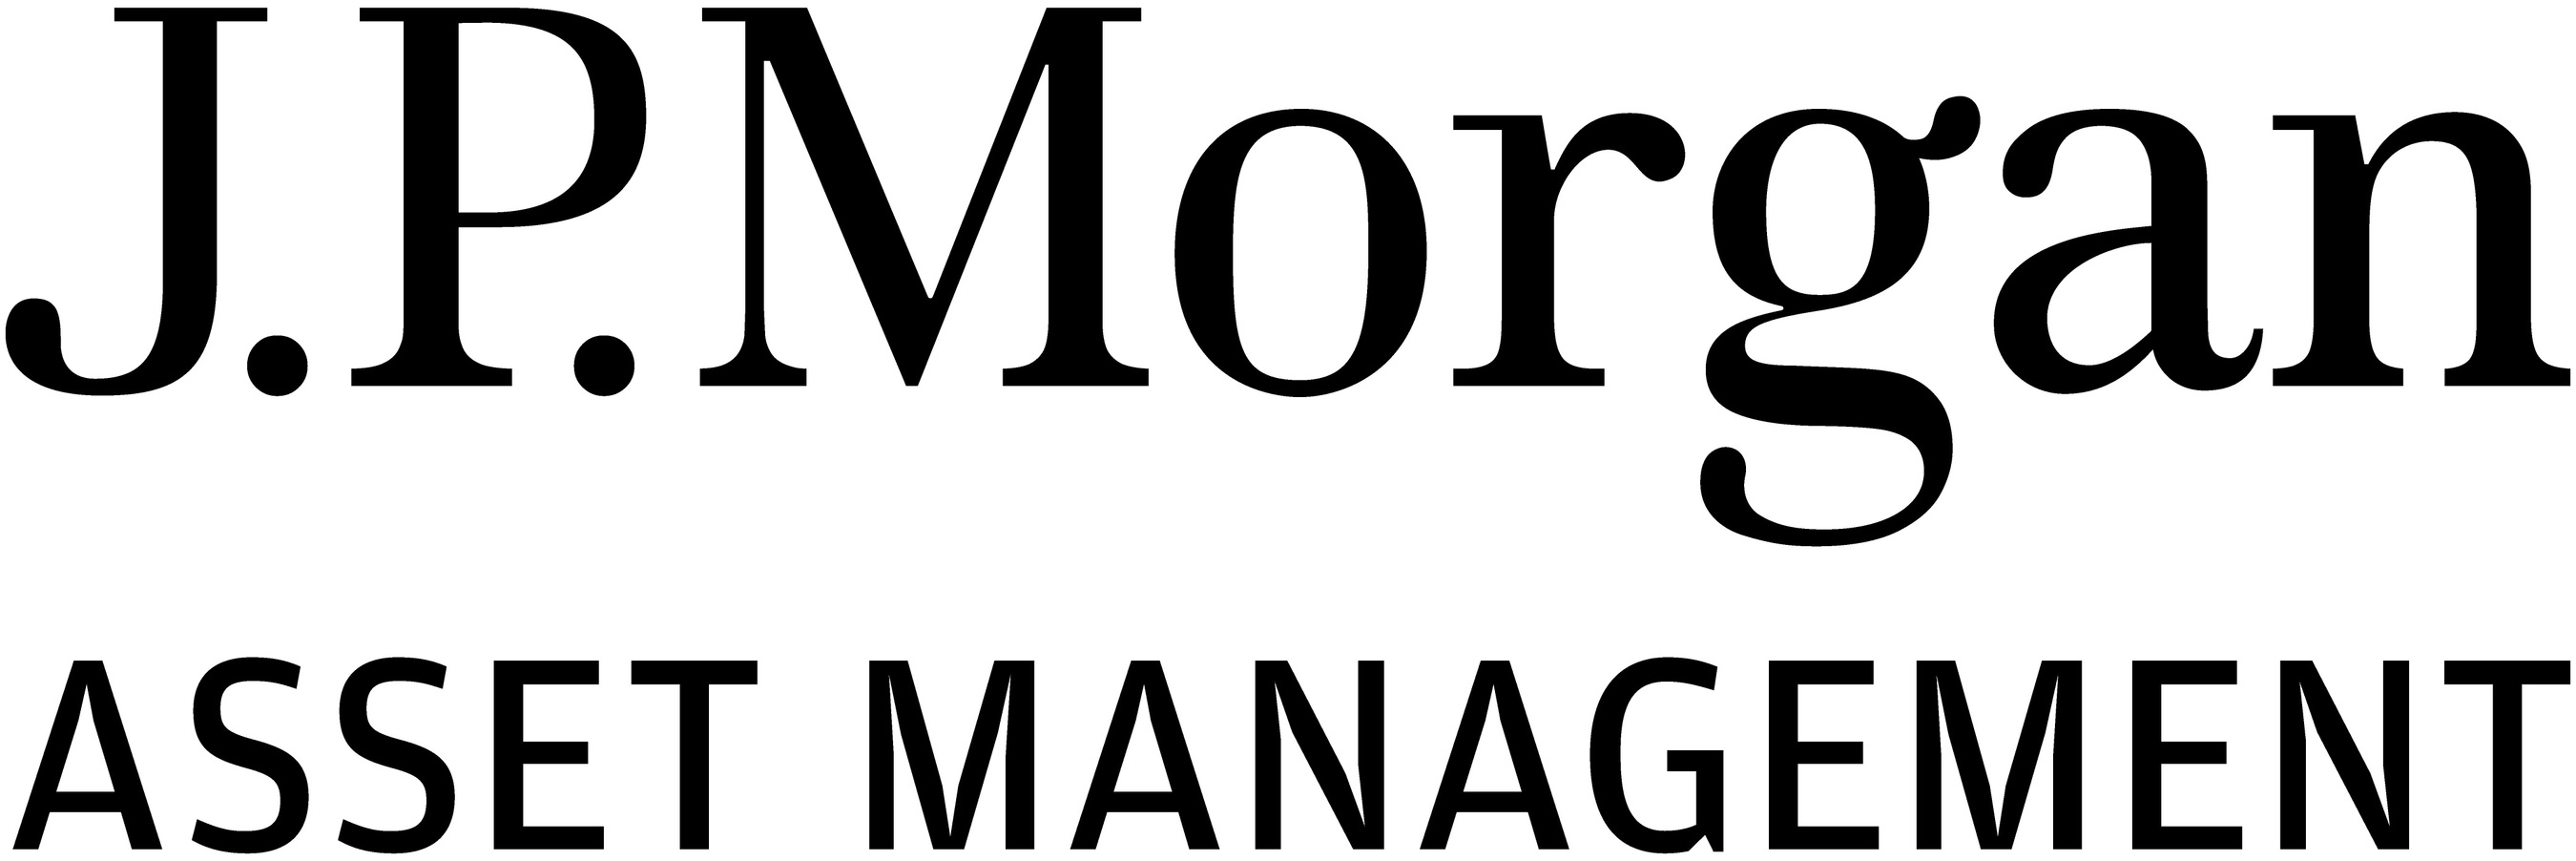 J.P. Morgan Asset Management Logo (PRNewsfoto/J.P. Morgan Asset Management)